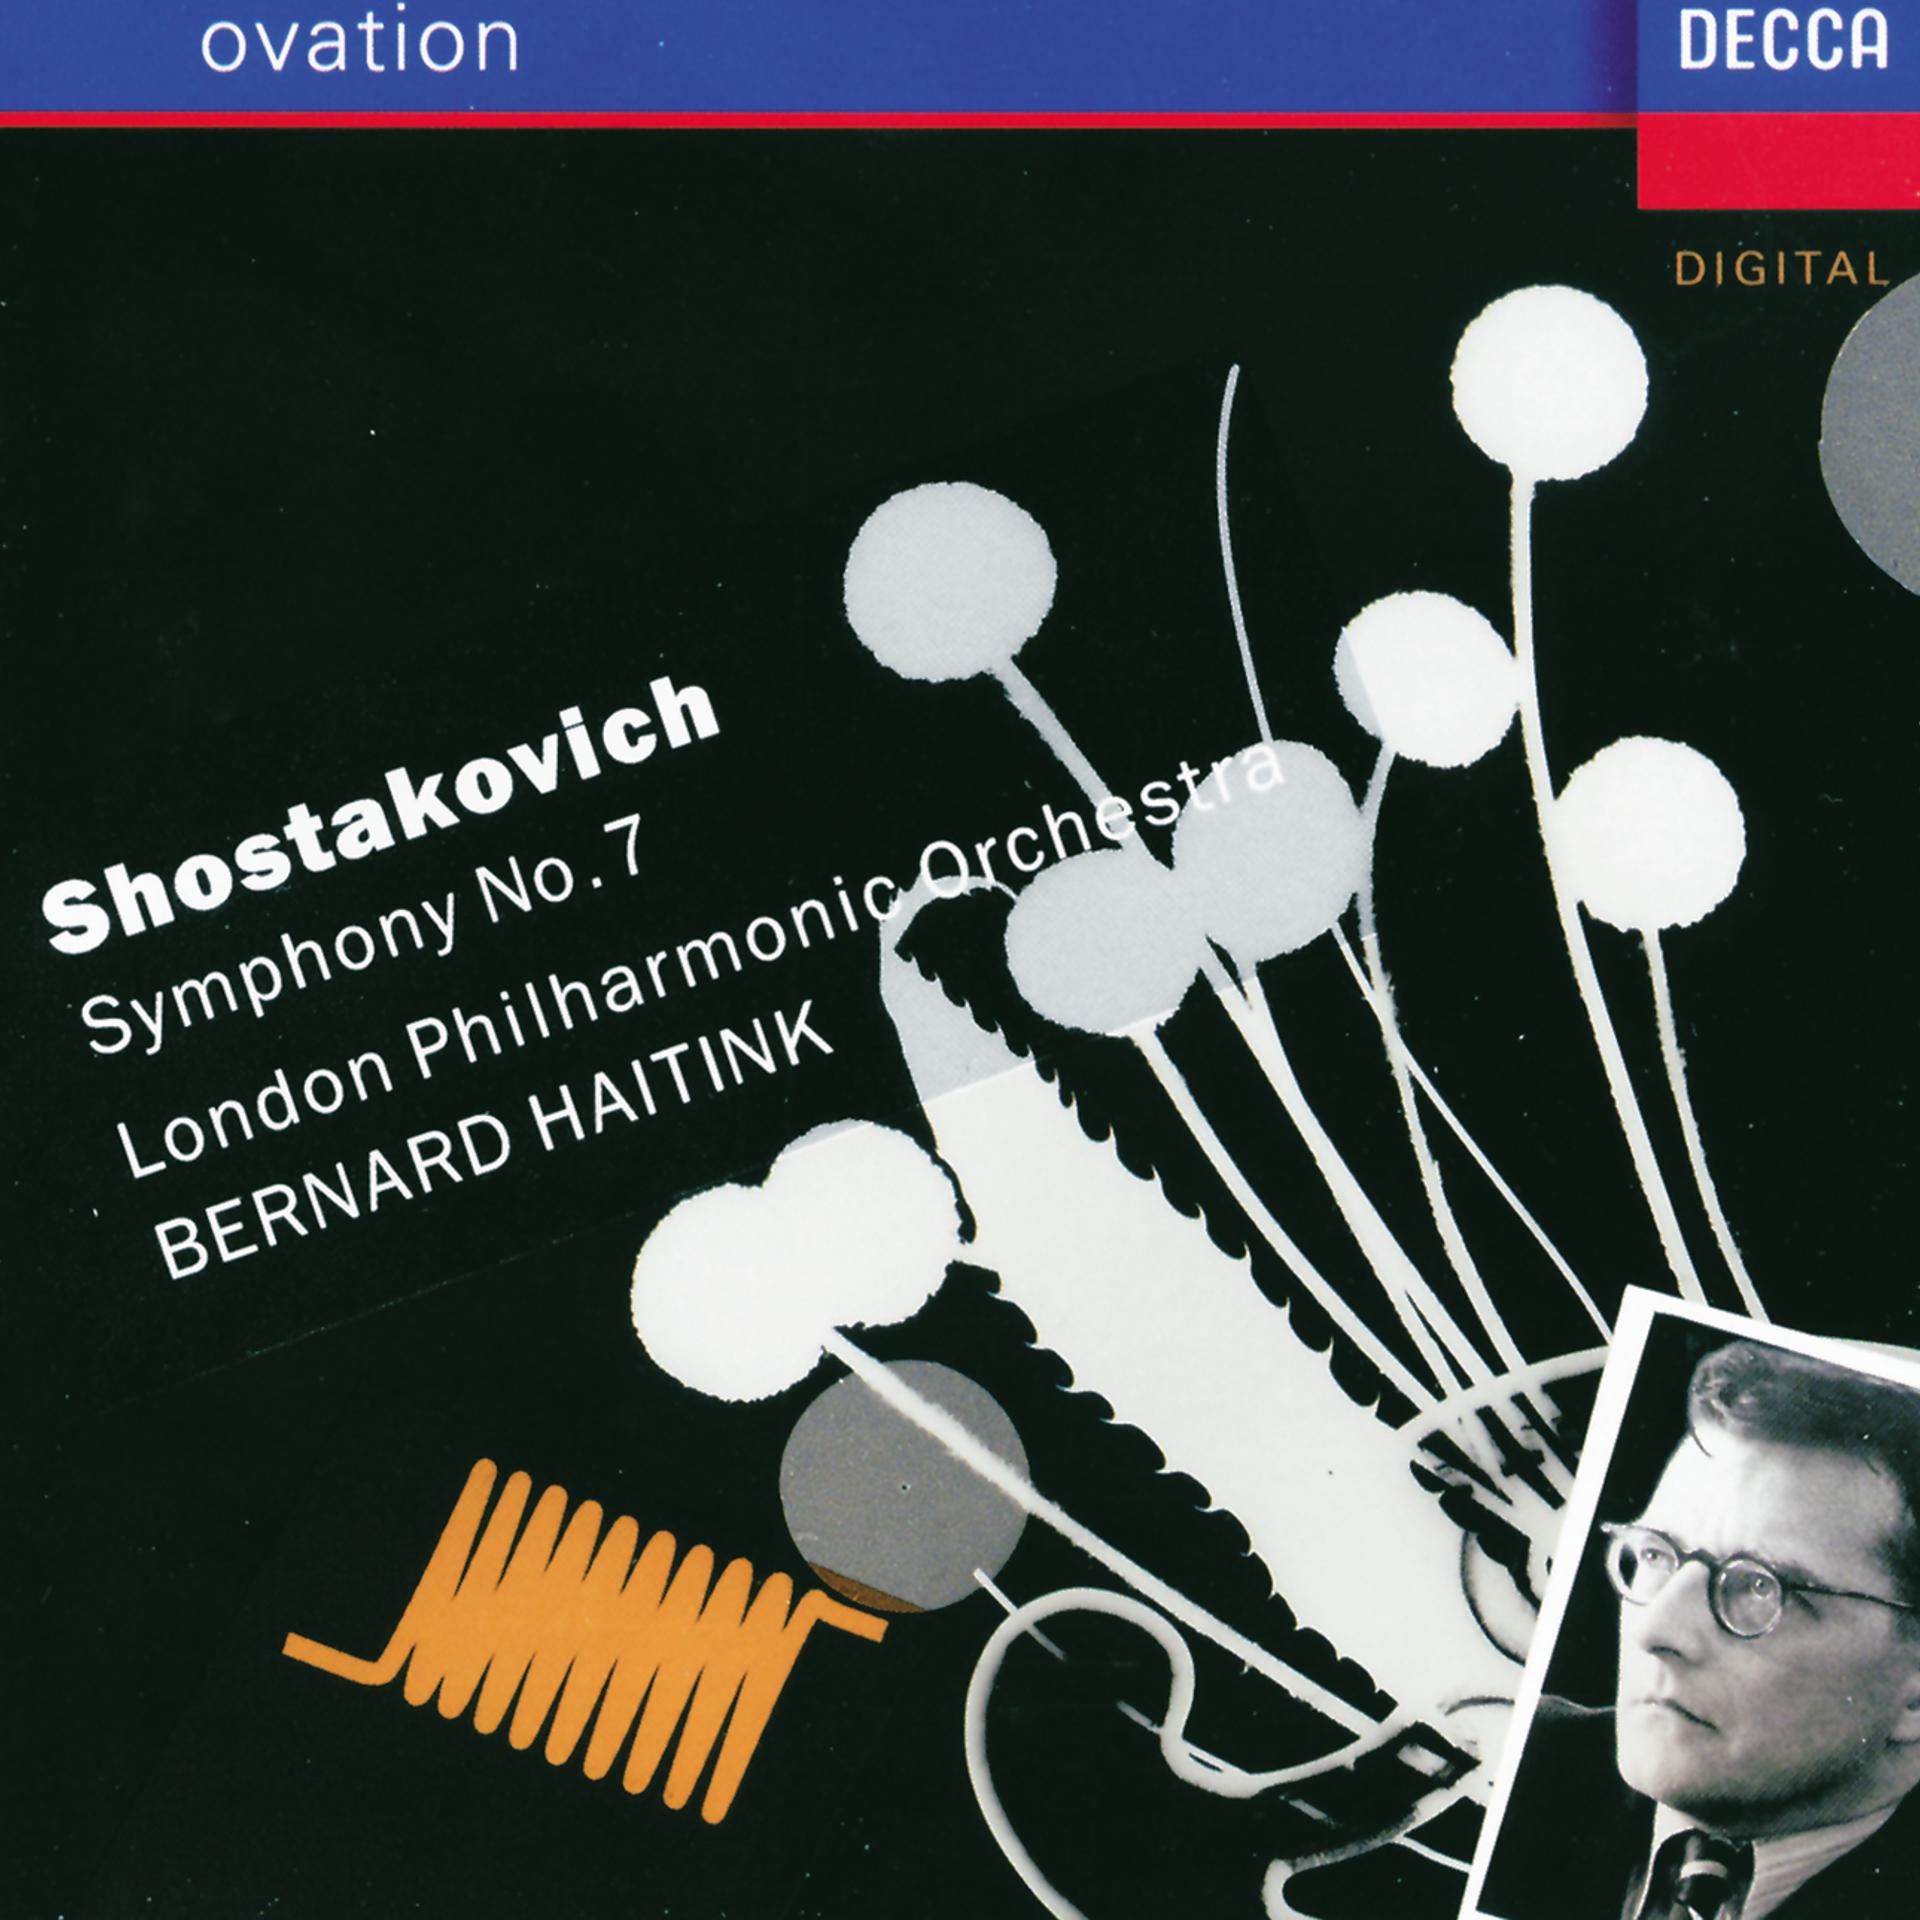 Постер альбома Shostakovich: Symphony No.7 "Leningrad"